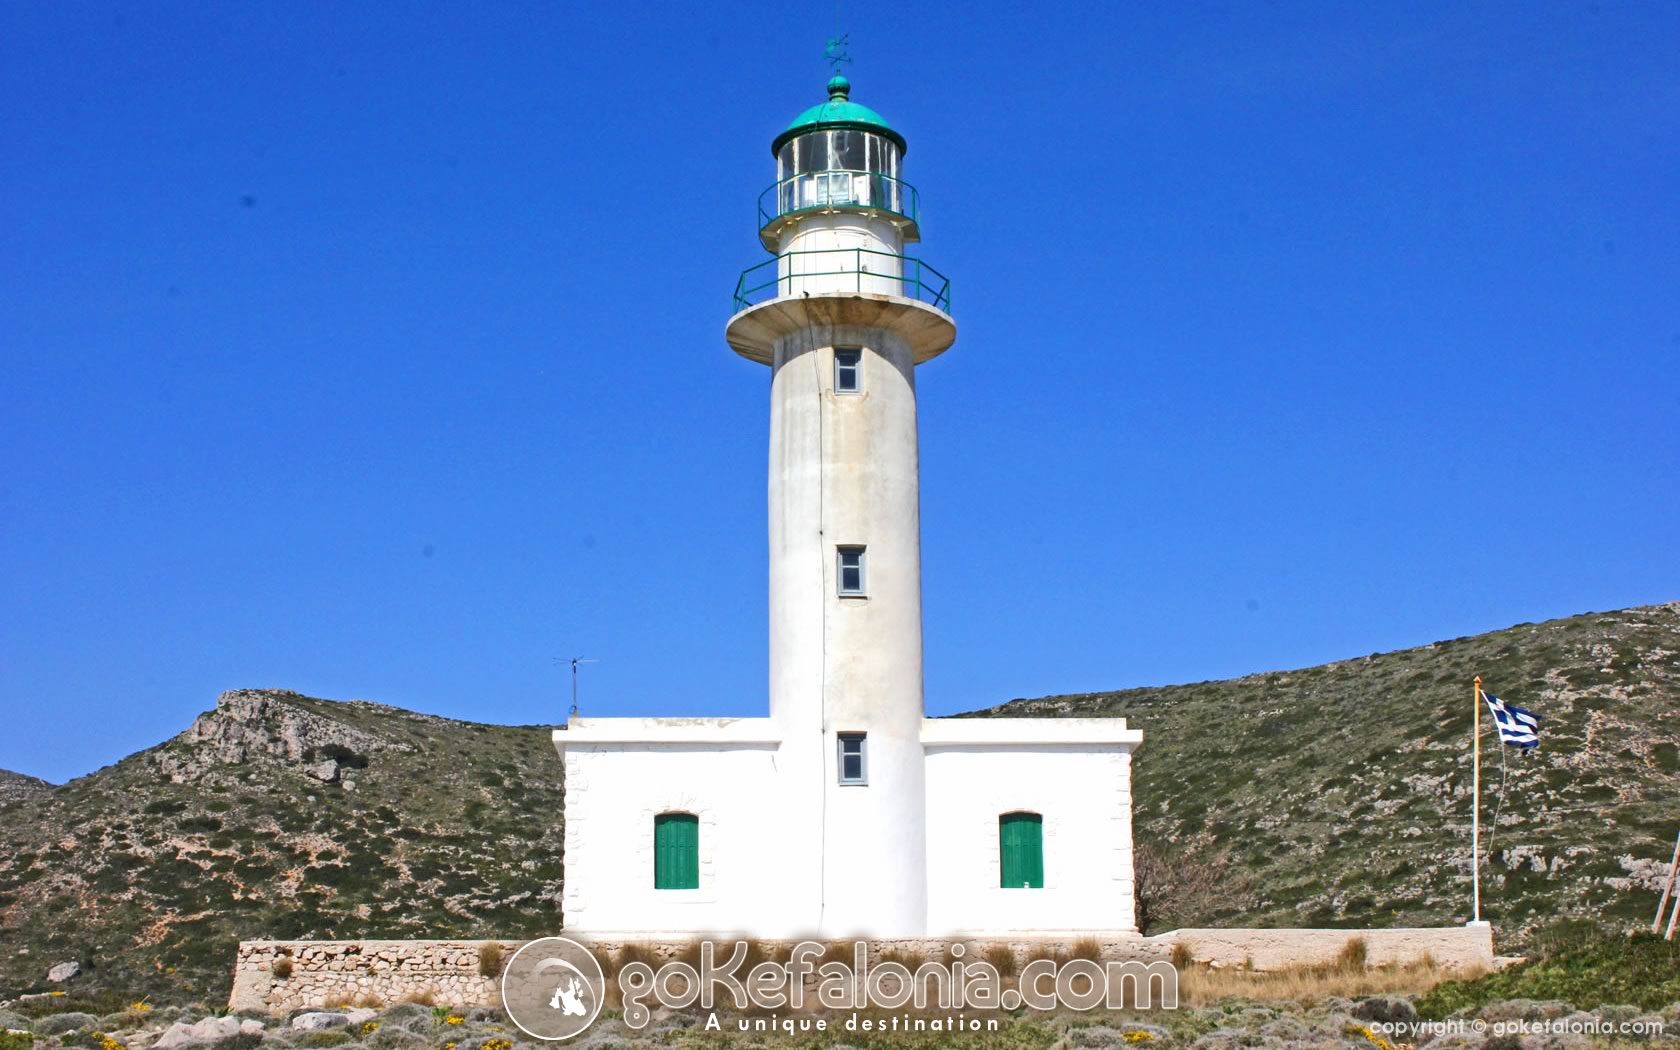 The Lighthouse of Gerogombos